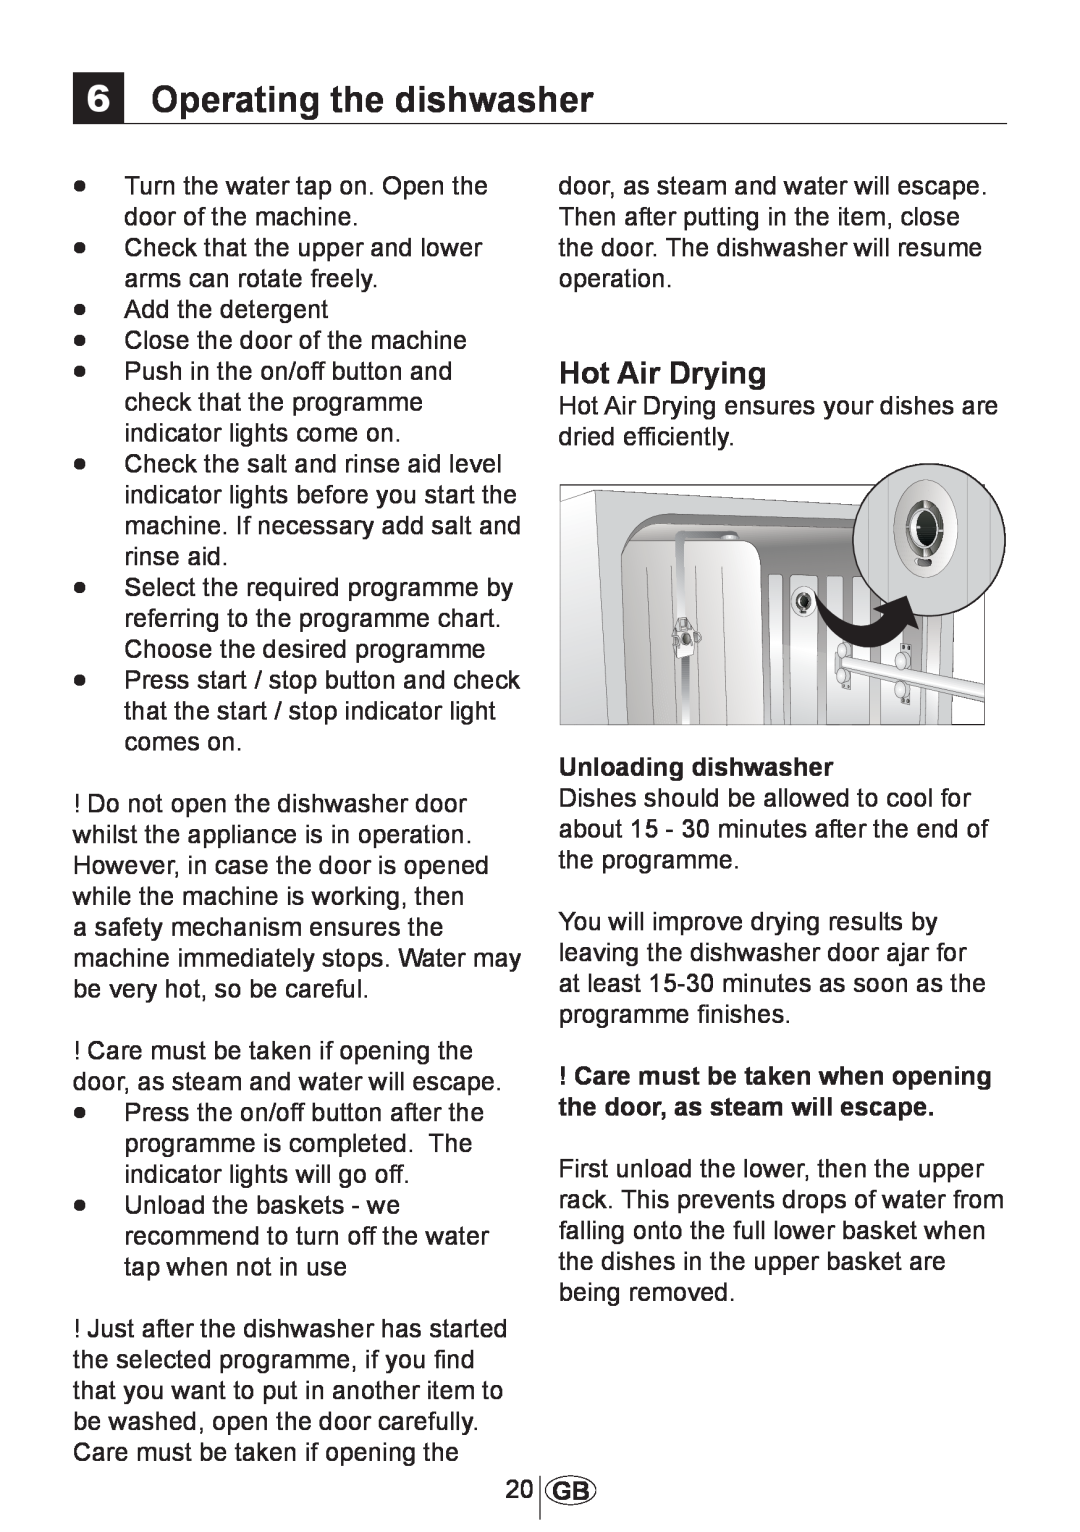 Beko DWD5414 manual 6Operating the dishwasher, Hot Air Drying, Unloading dishwasher 